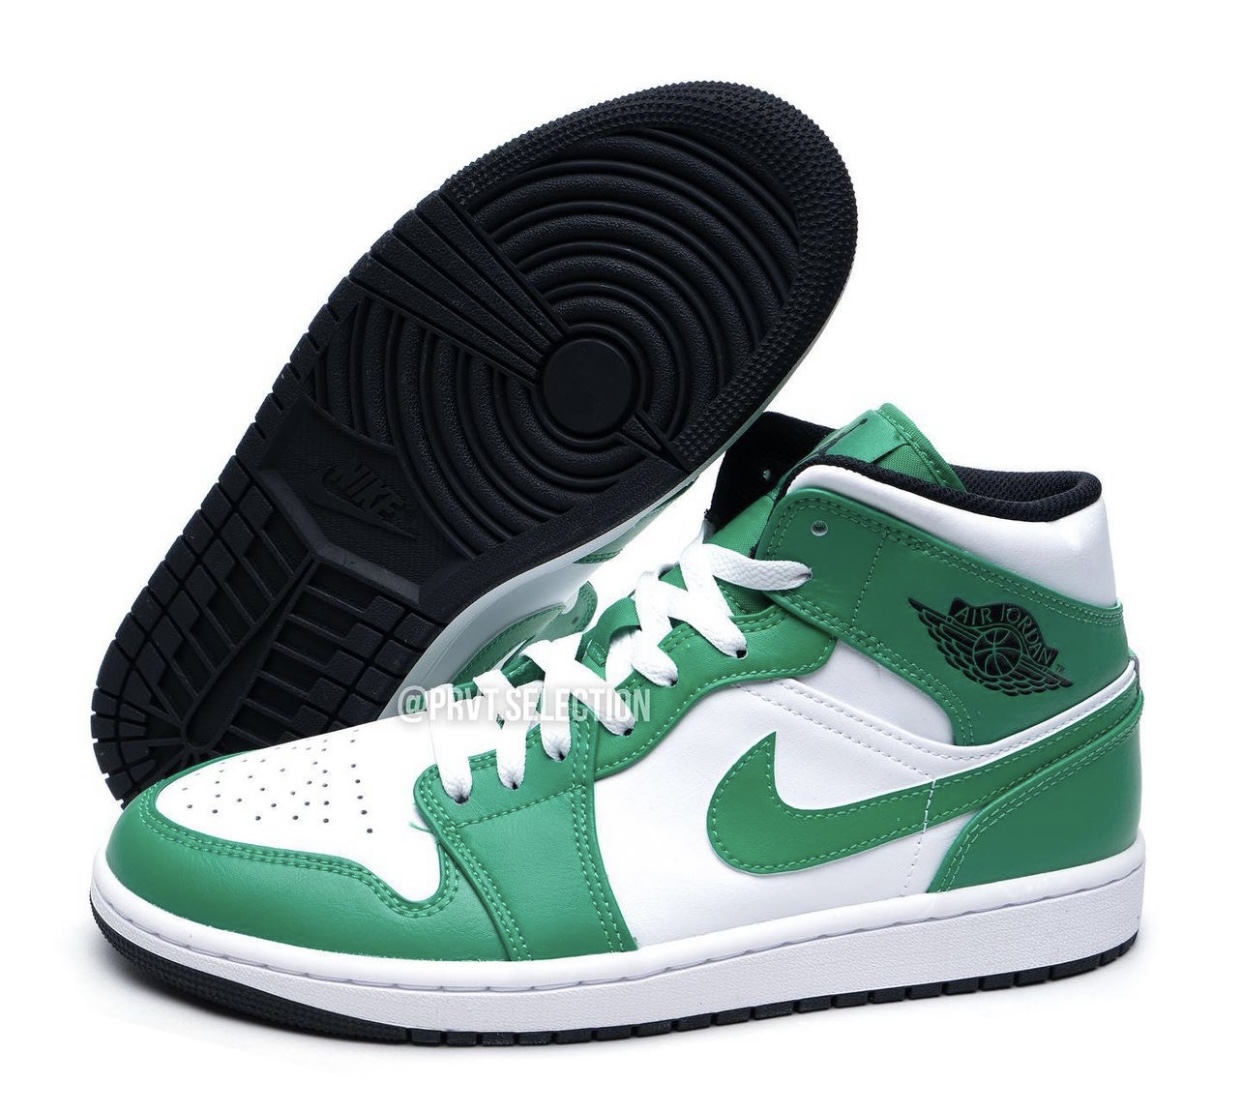 Nike UNION LA × NIKE AIR JORDAN High Retro 85 Neutral Grau-us12 uk11 eu46 DS BRANDNEU Celtics Lucky Green DQ8426-301 Release Date